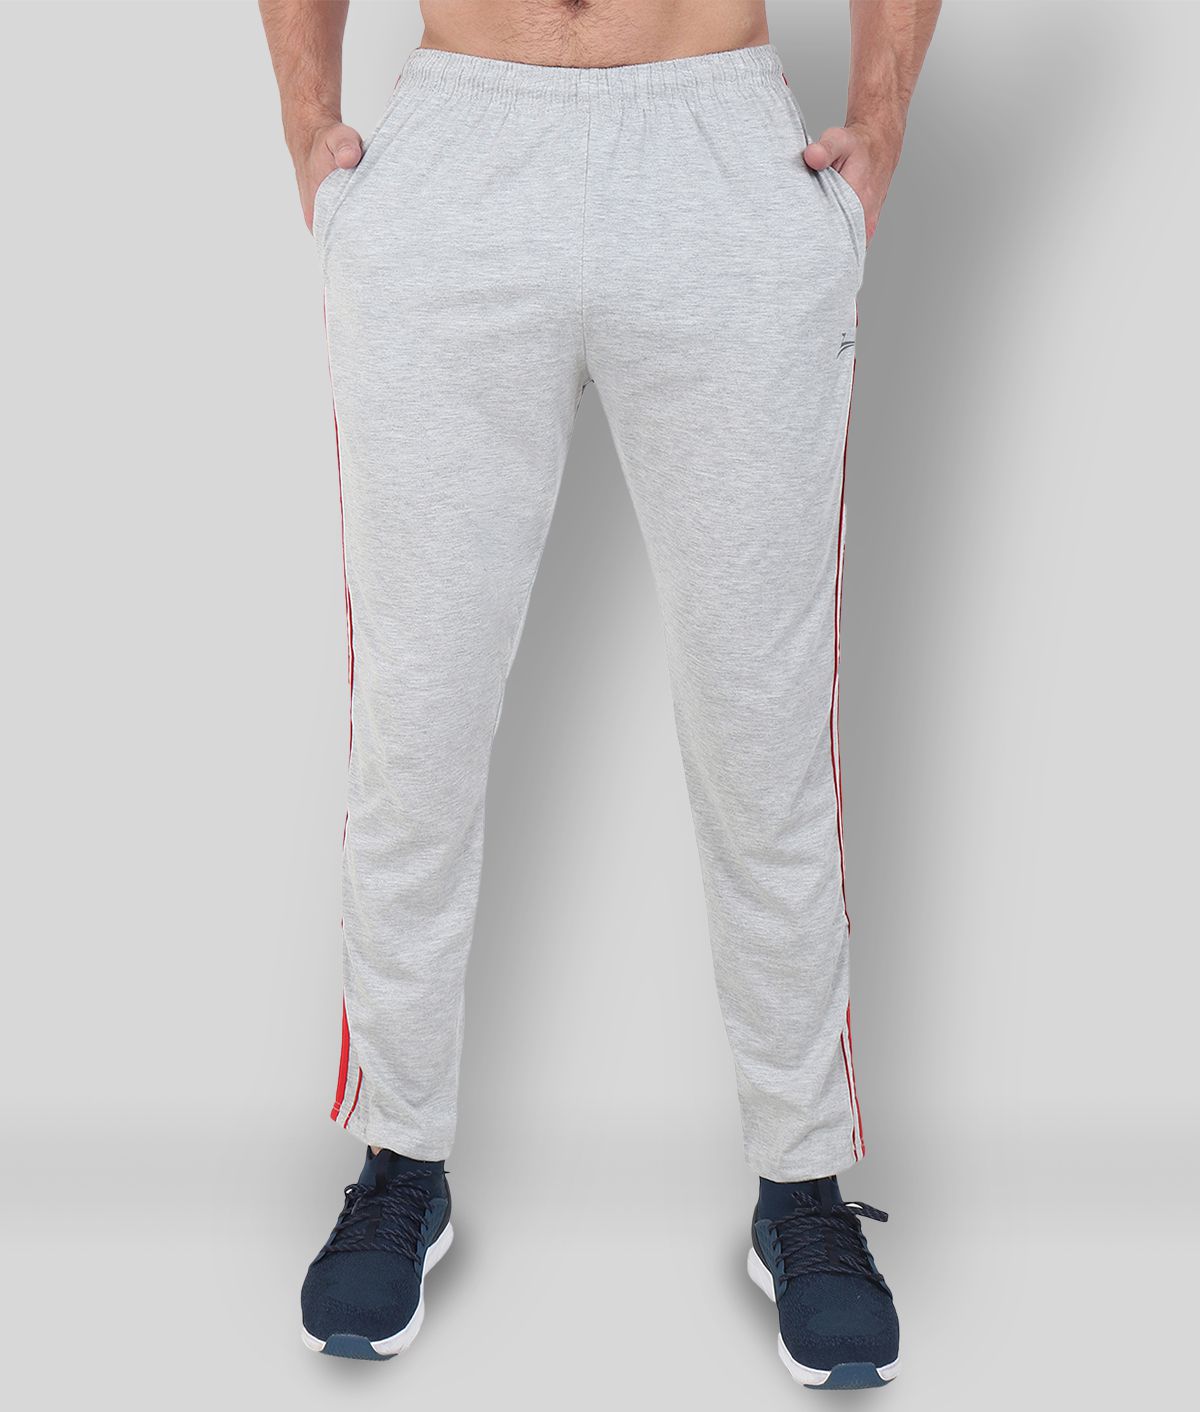 Buy Zeffit - Light Grey Cotton Blend Men's Trackpants ( Pack of 1 ...